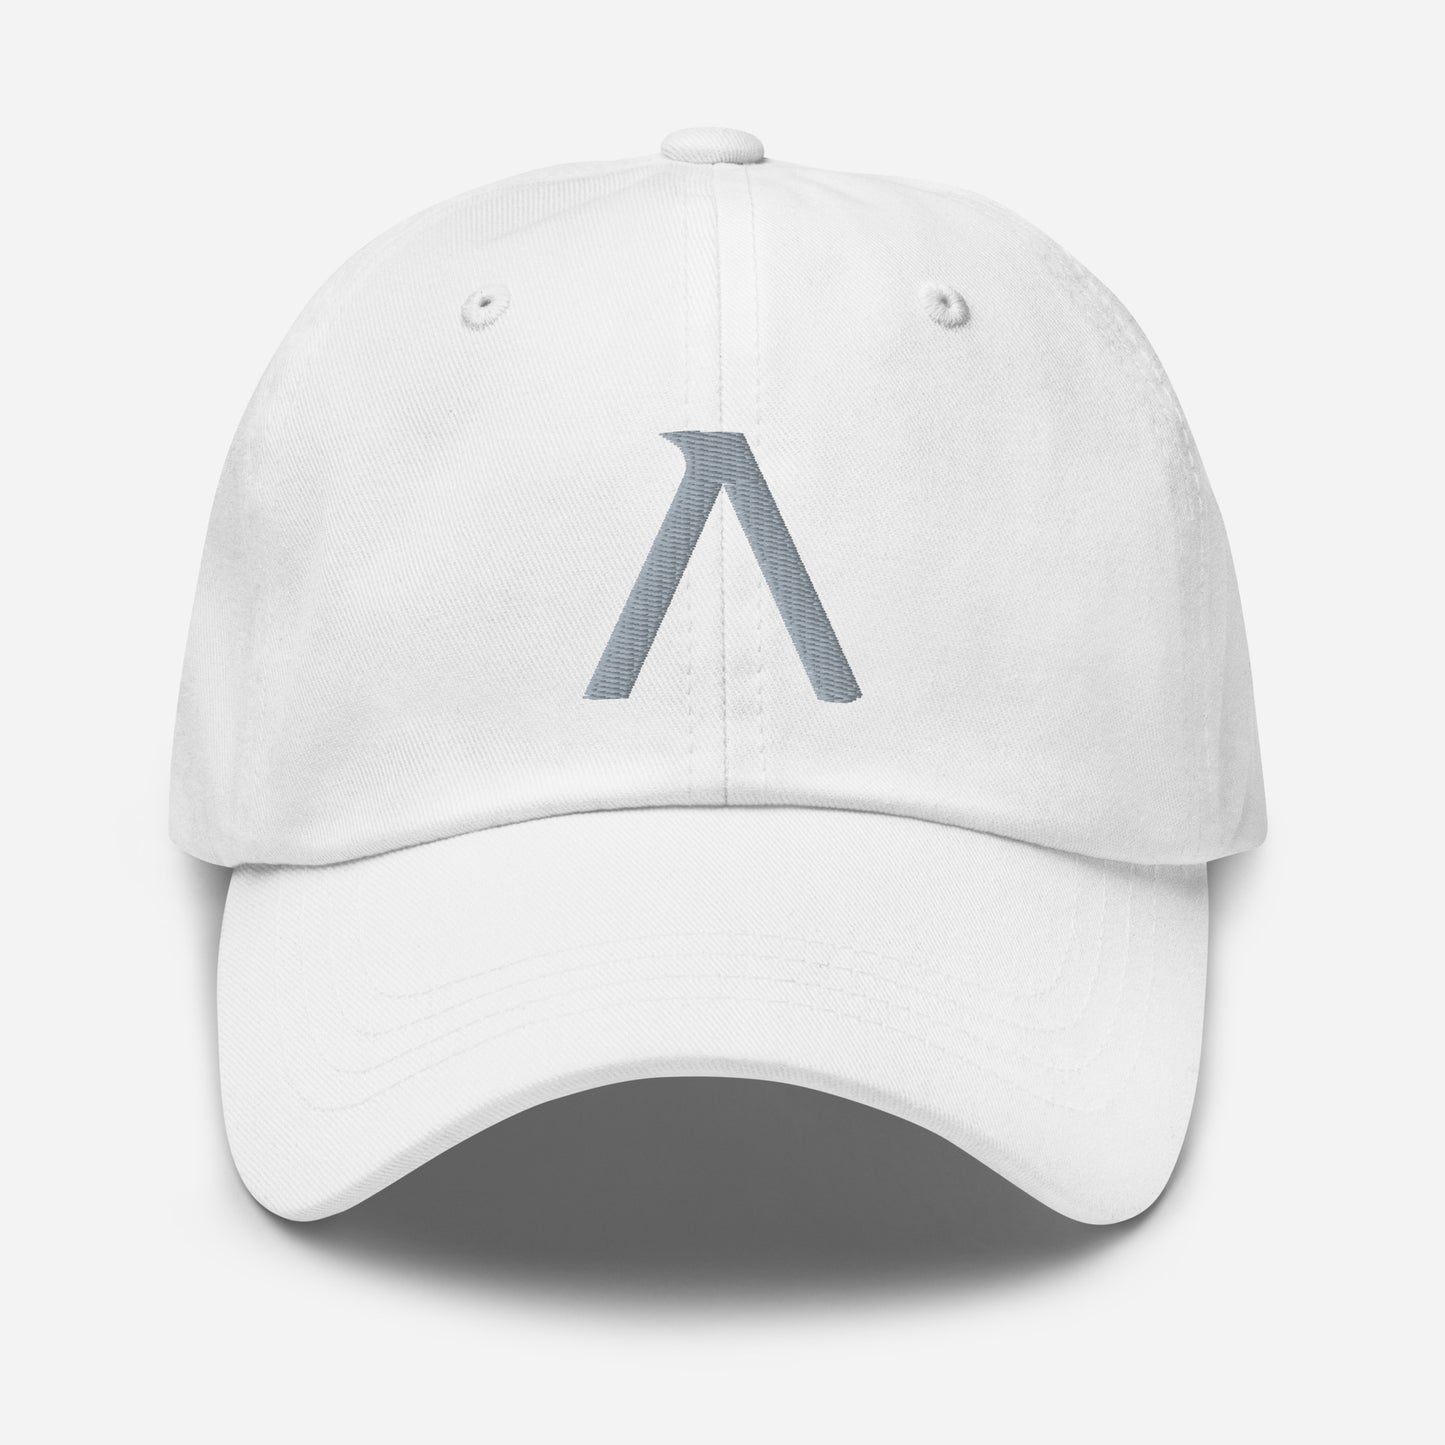 Adventure "A" Baseball hat